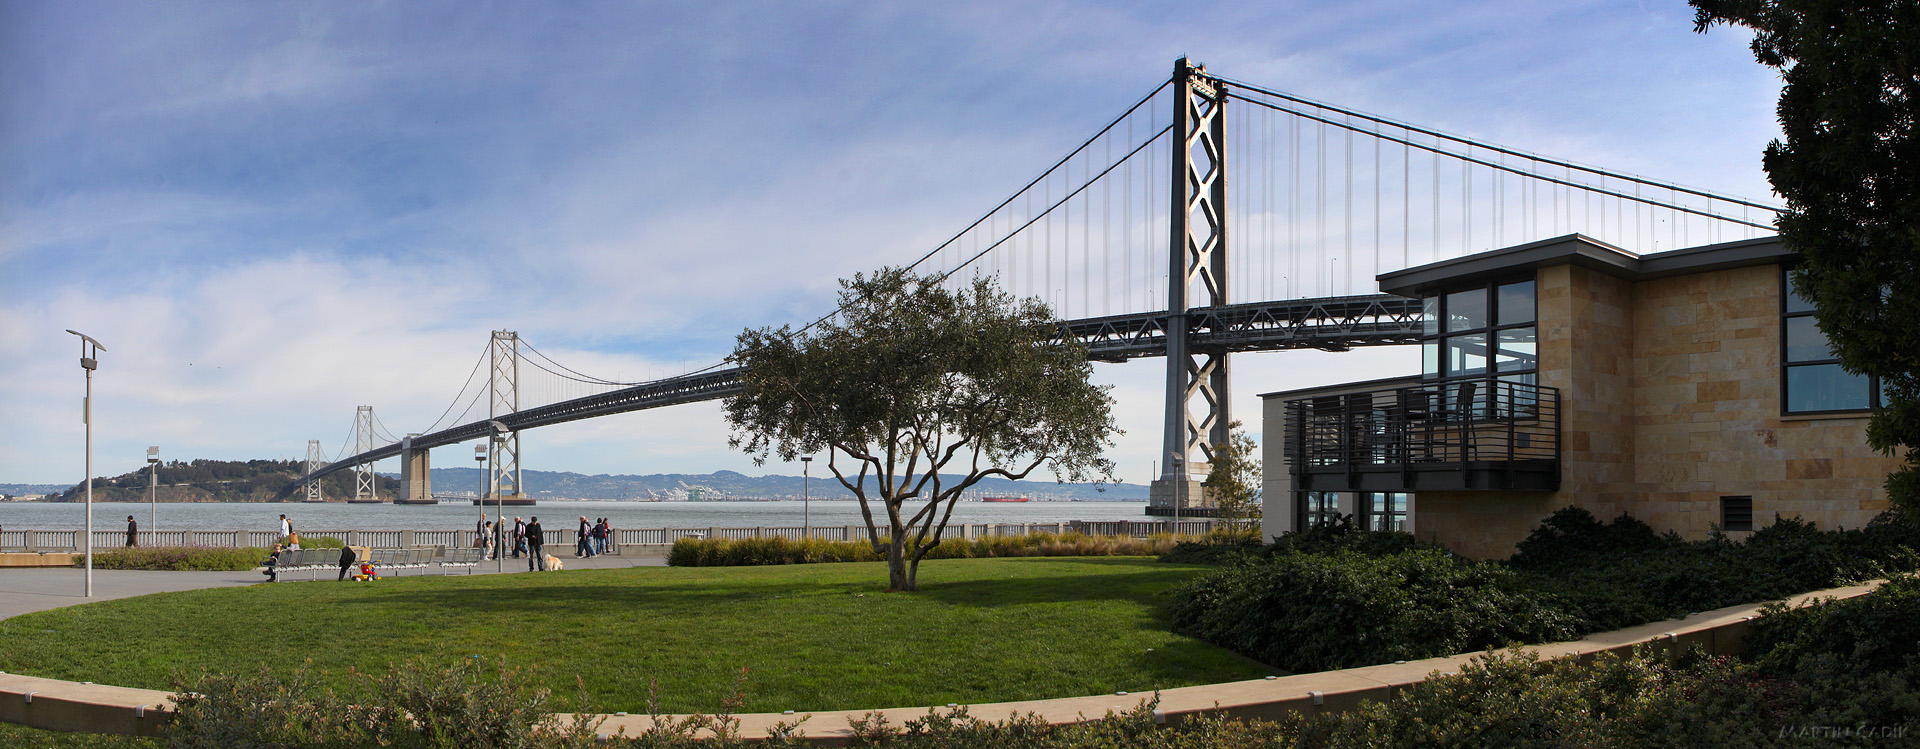 Bay Bridge, San Francisco, CA